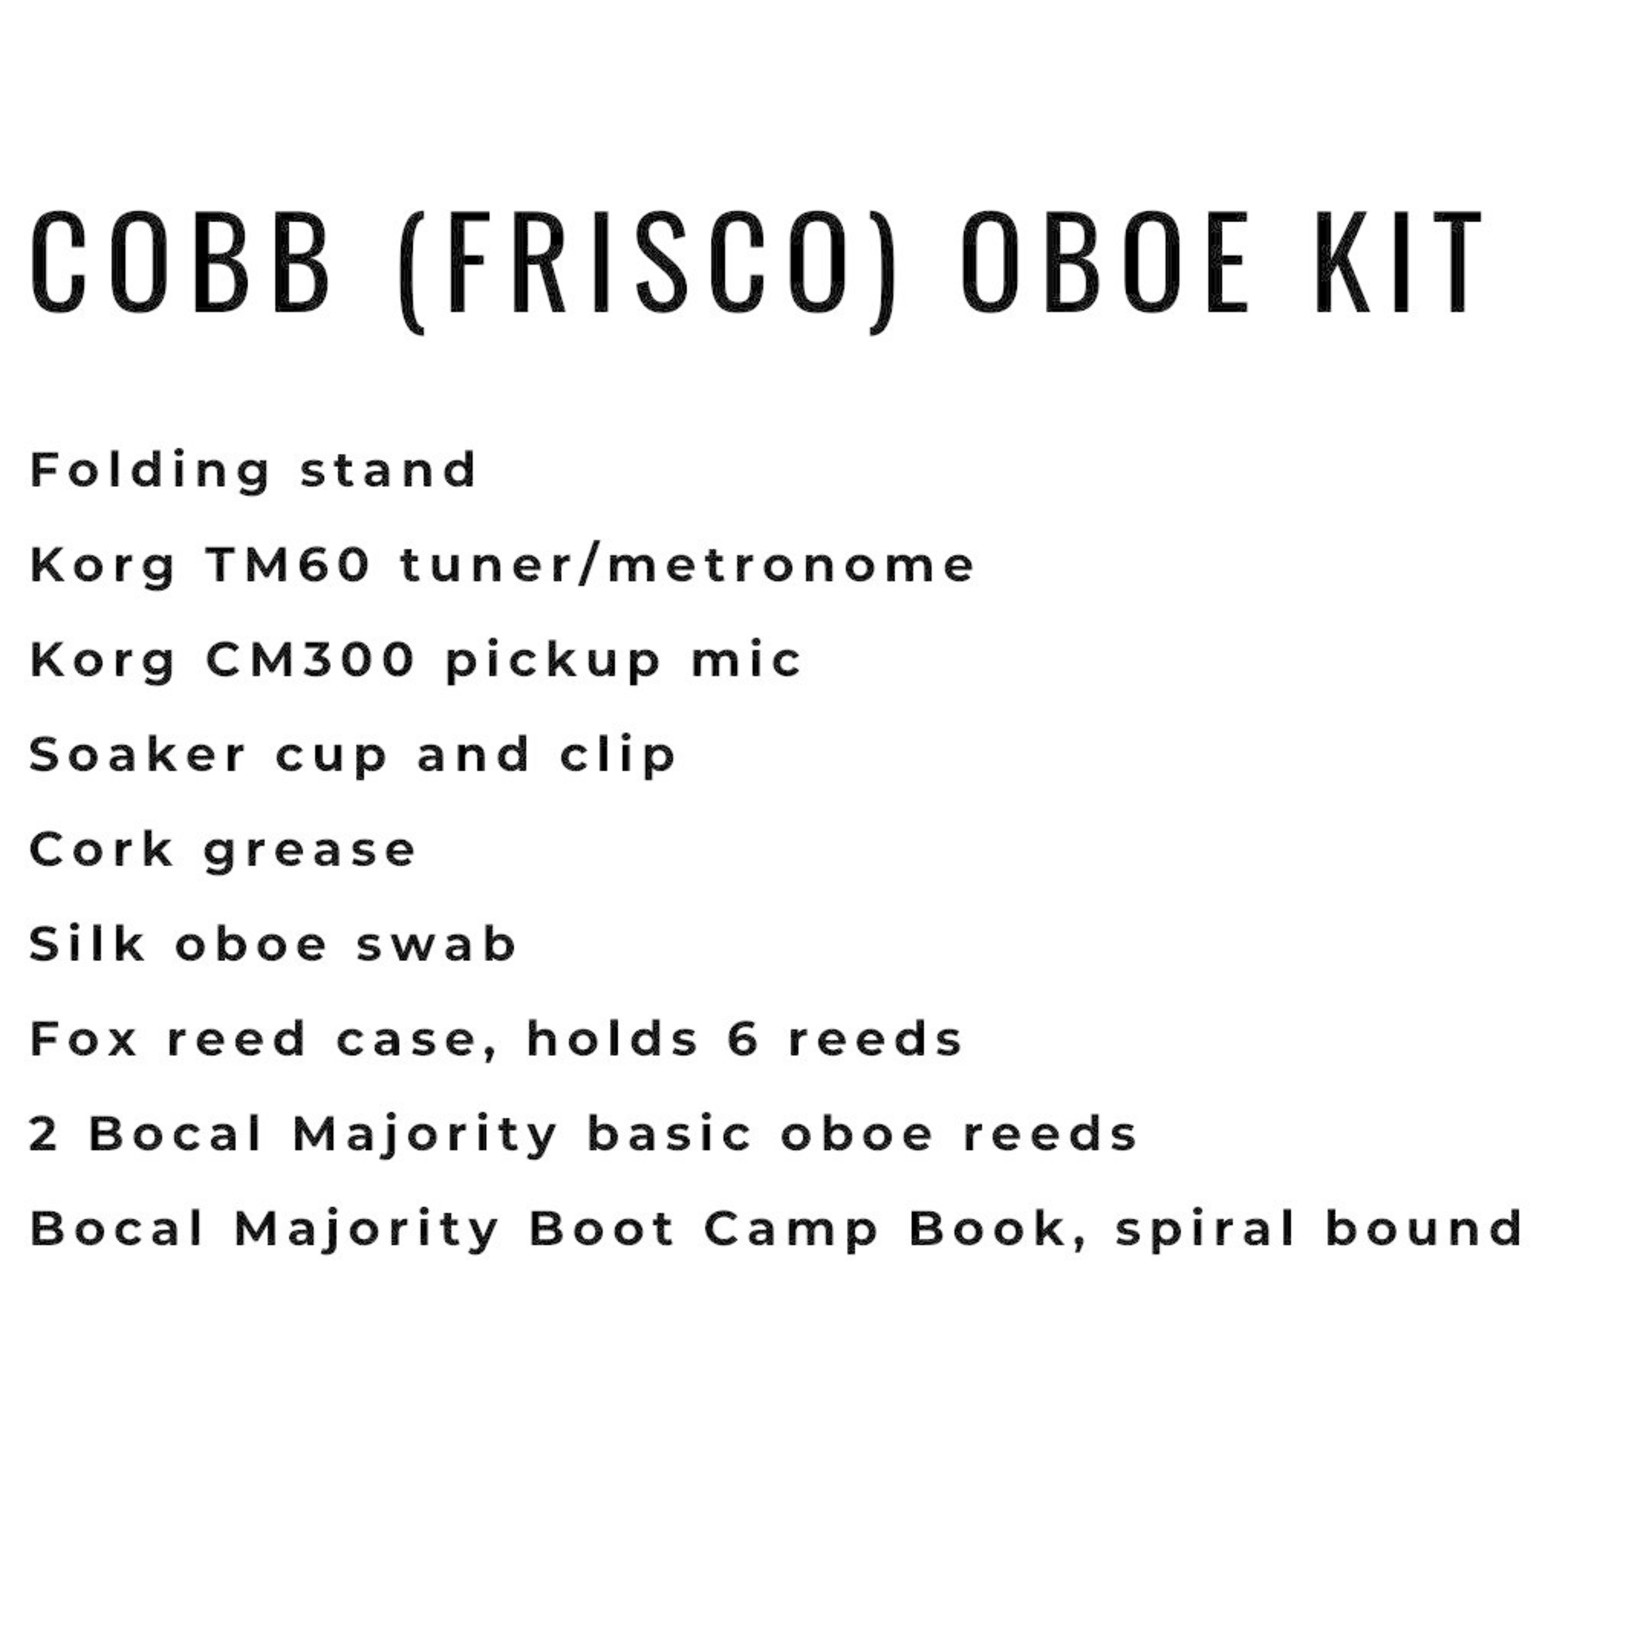 Bocal Majority Frisco ISD Oboe